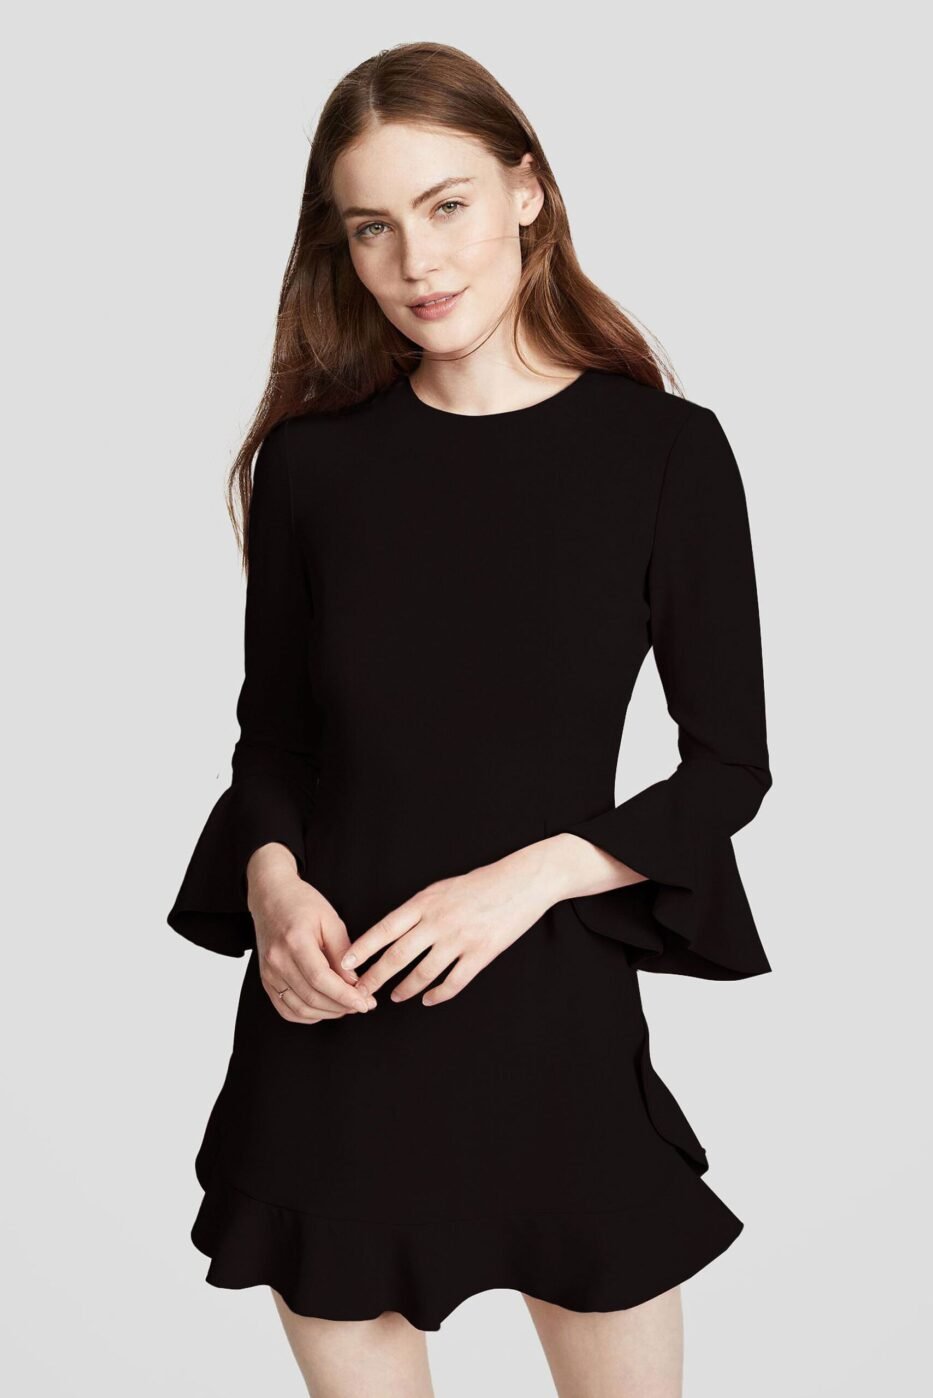 fashion-designer-black-dress